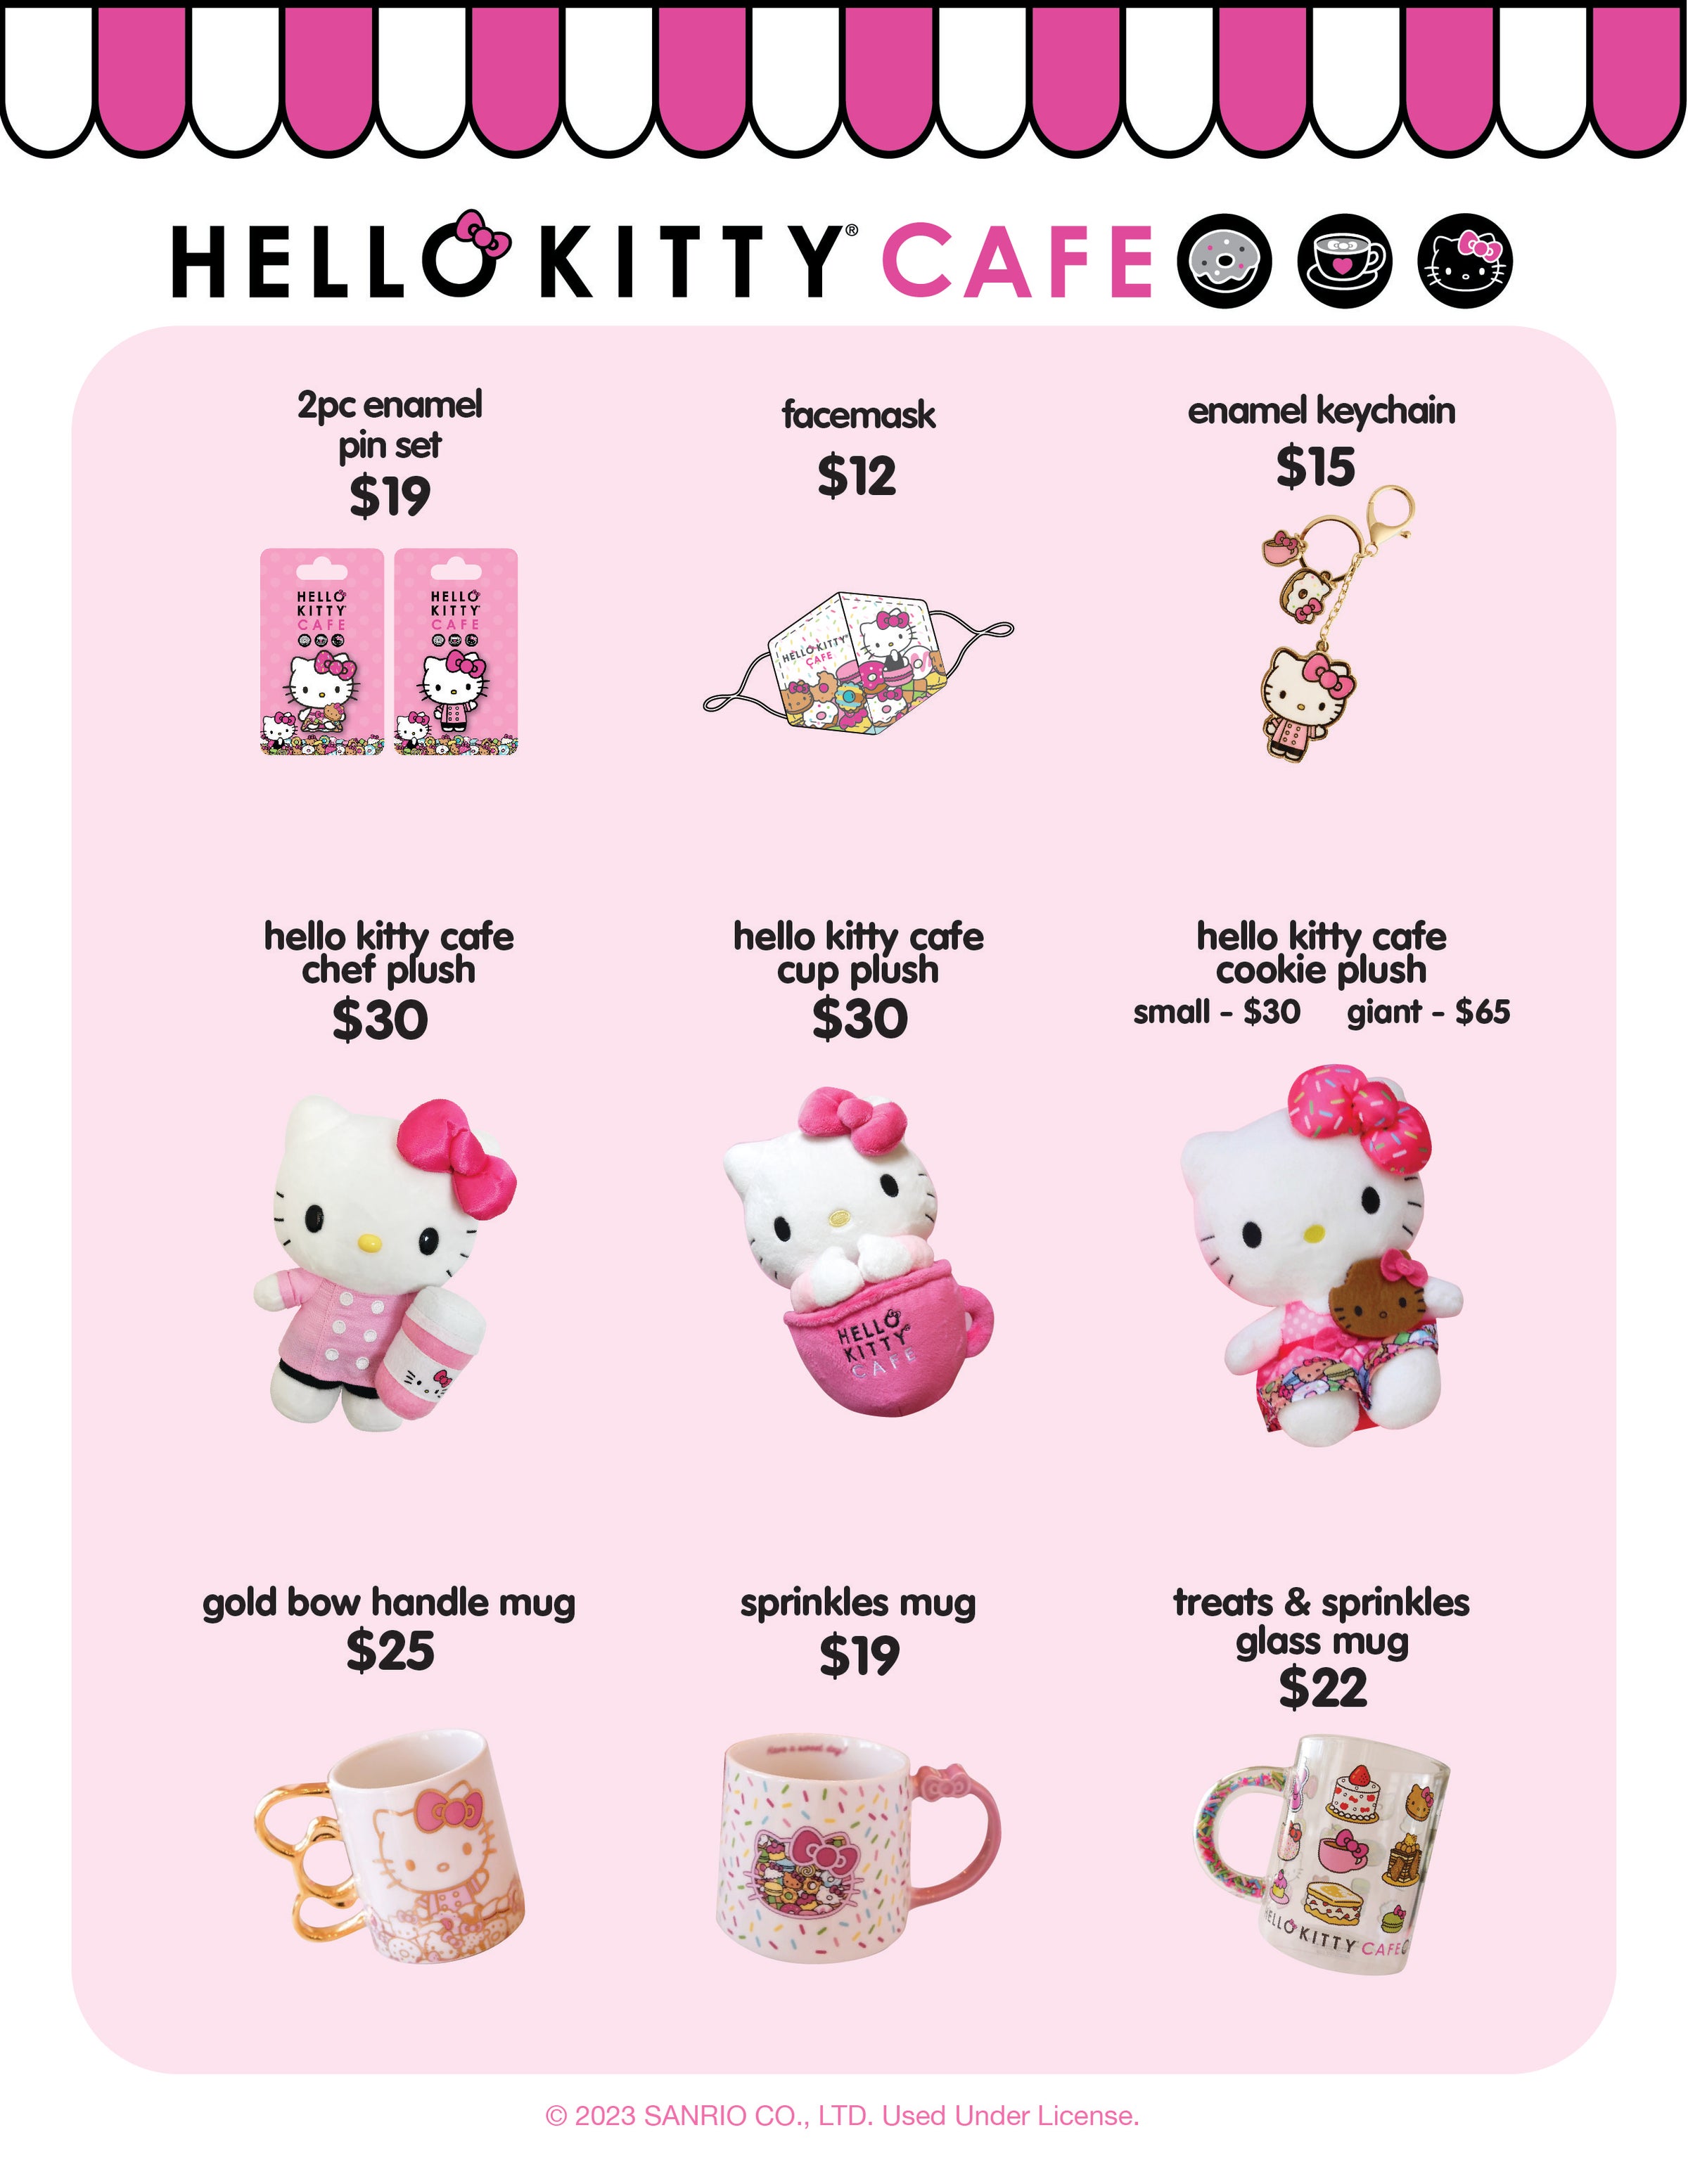 hello kitty cafe merchandise